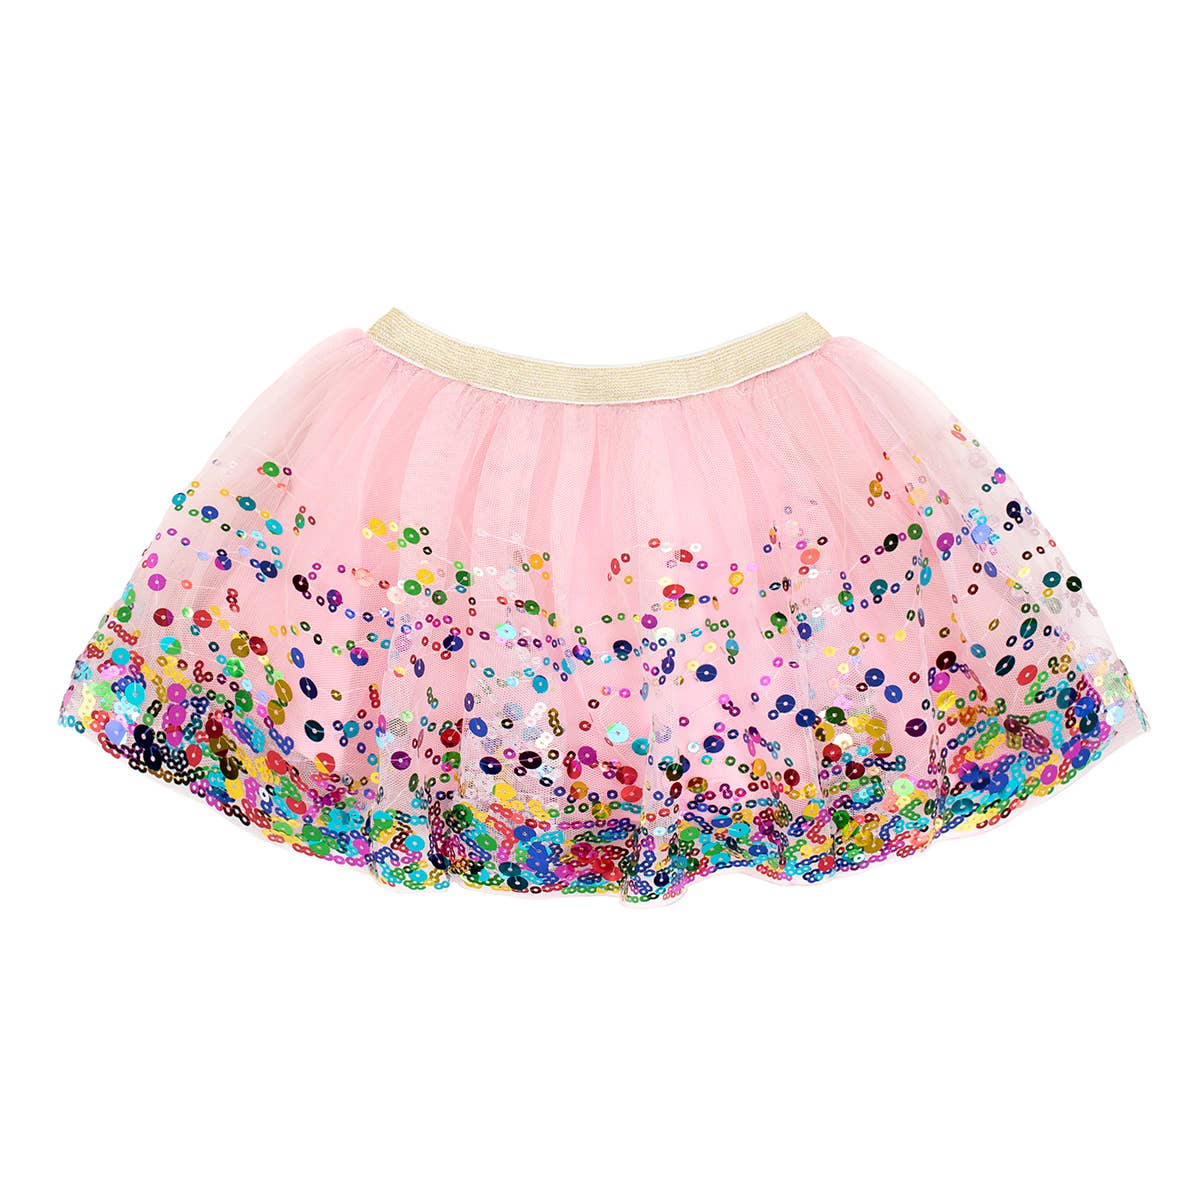 Sweet Wink - Pink Confetti Tutu - Dress Up Skirt - Kids Tutu